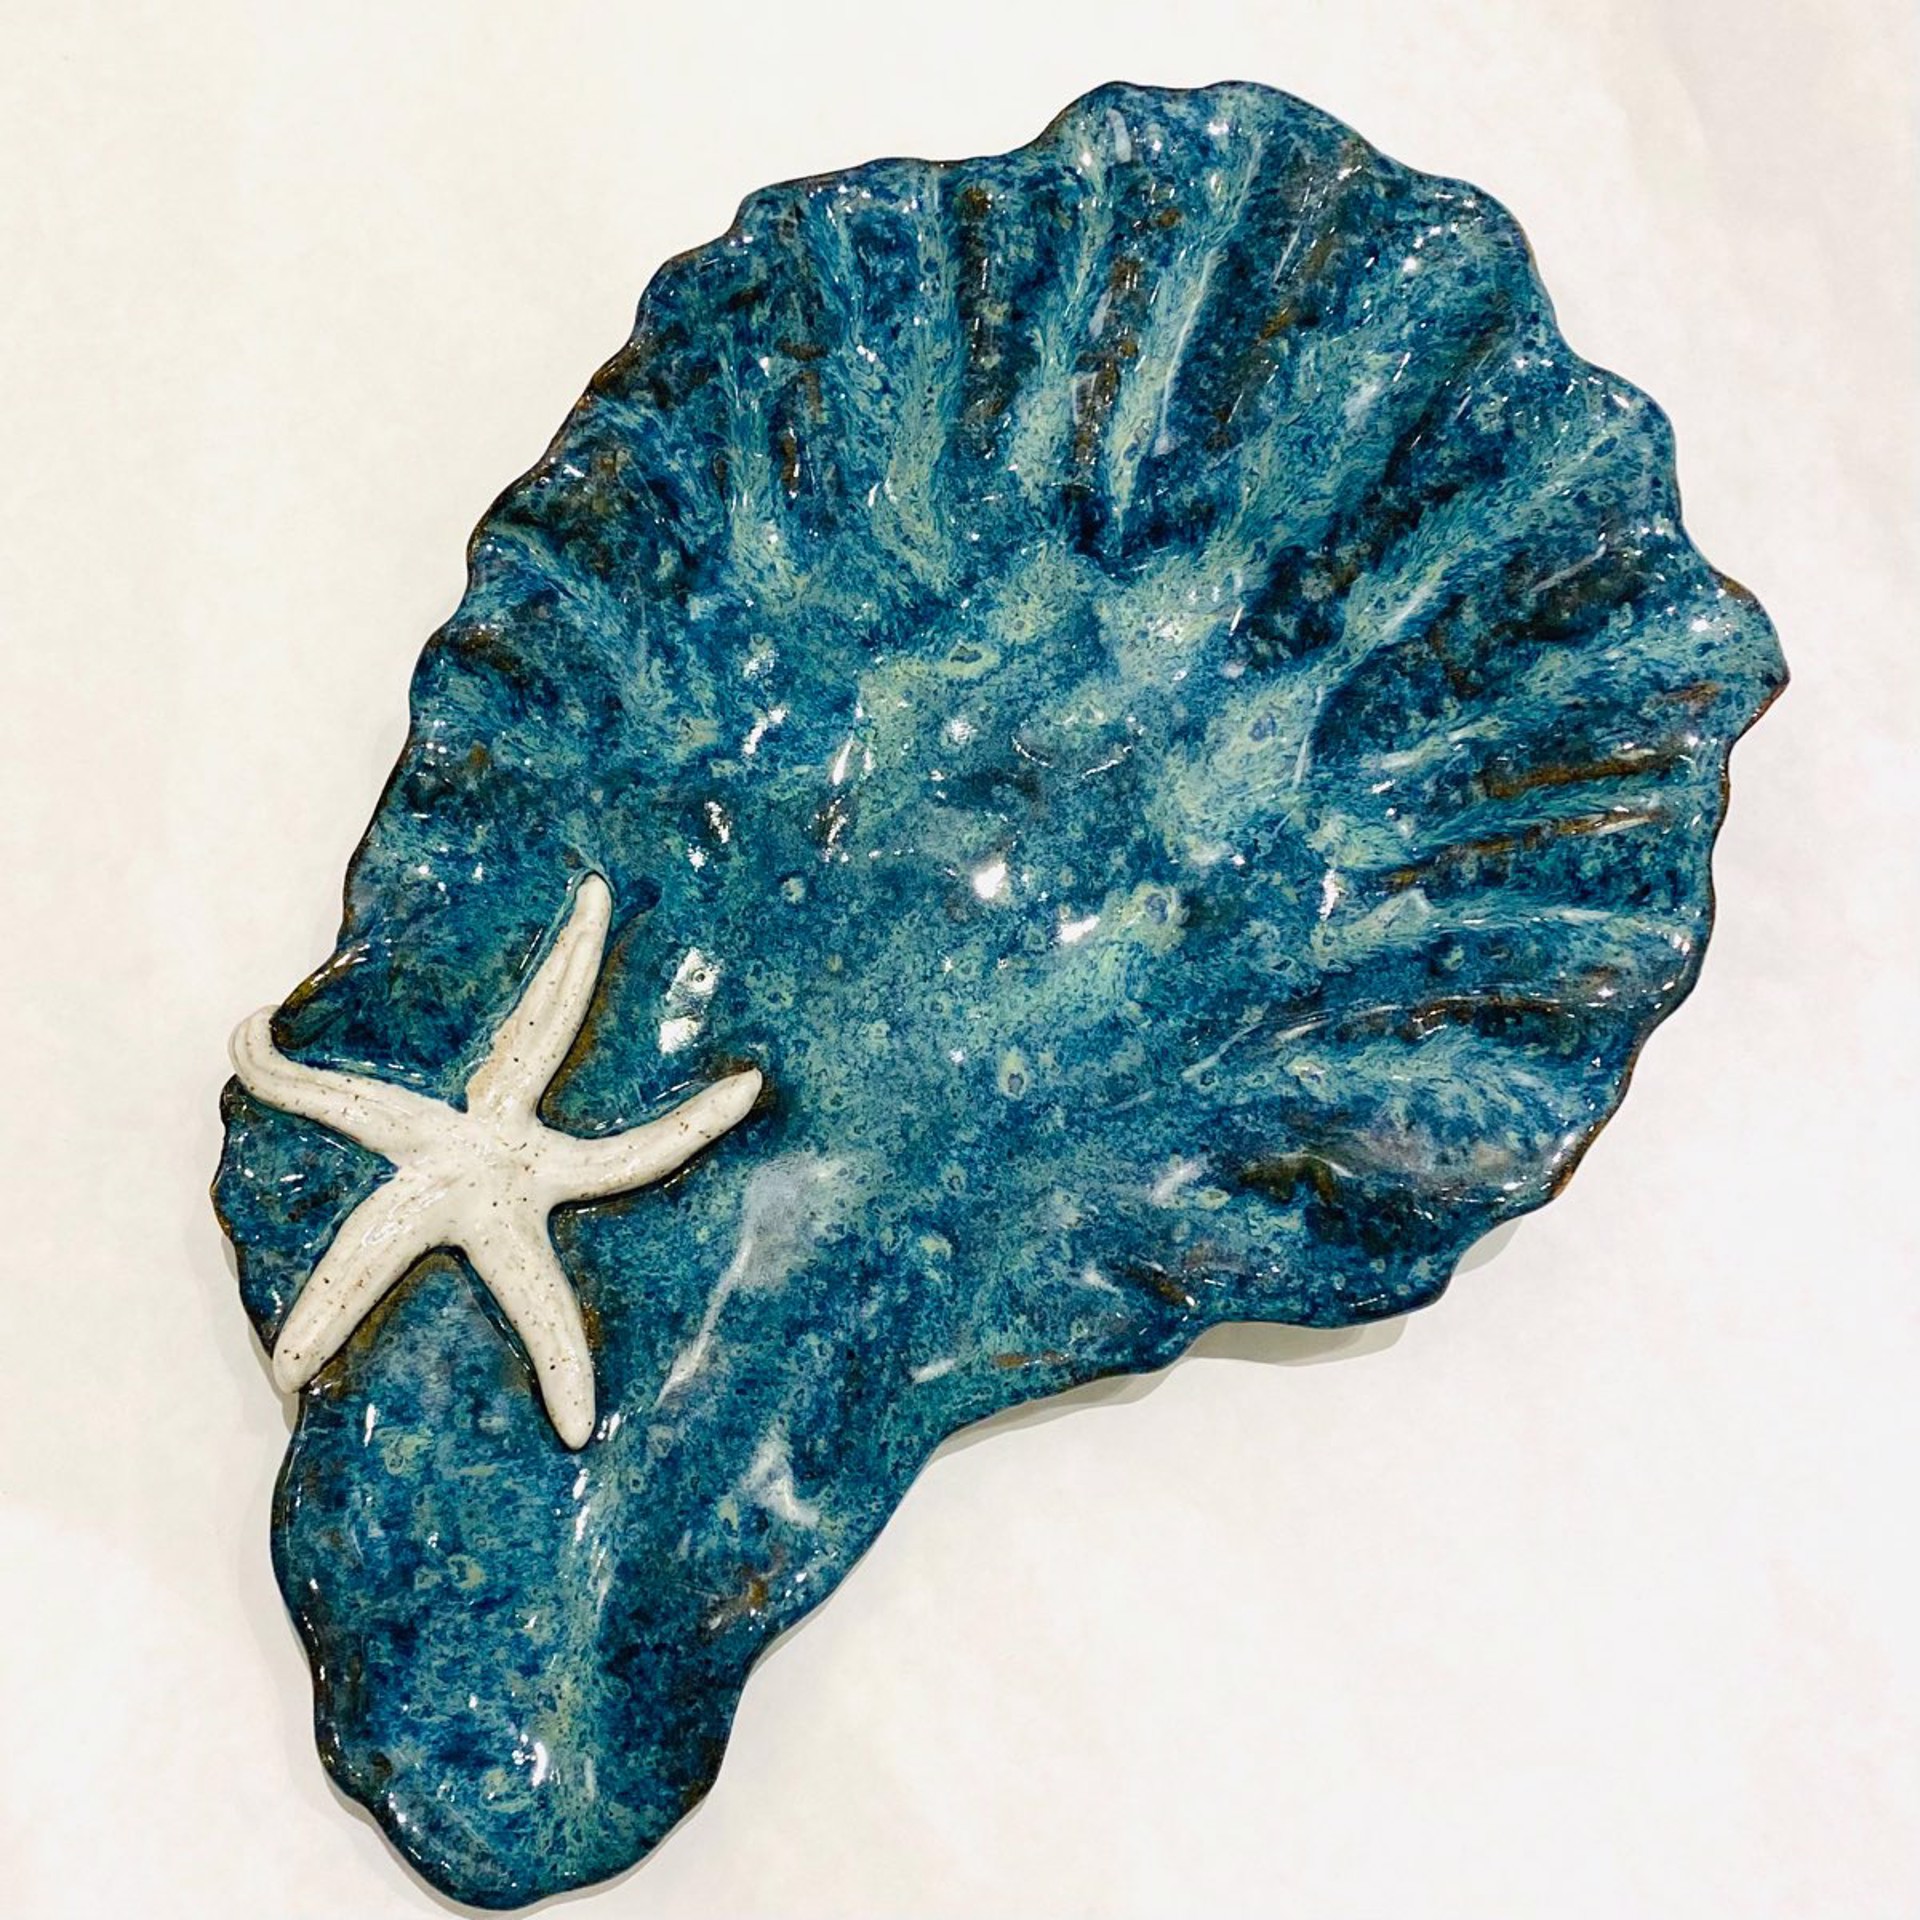 Platter Oyster Shell Shape with One Starfish (Blue Glaze) LG23-1188 by Jim & Steffi Logan